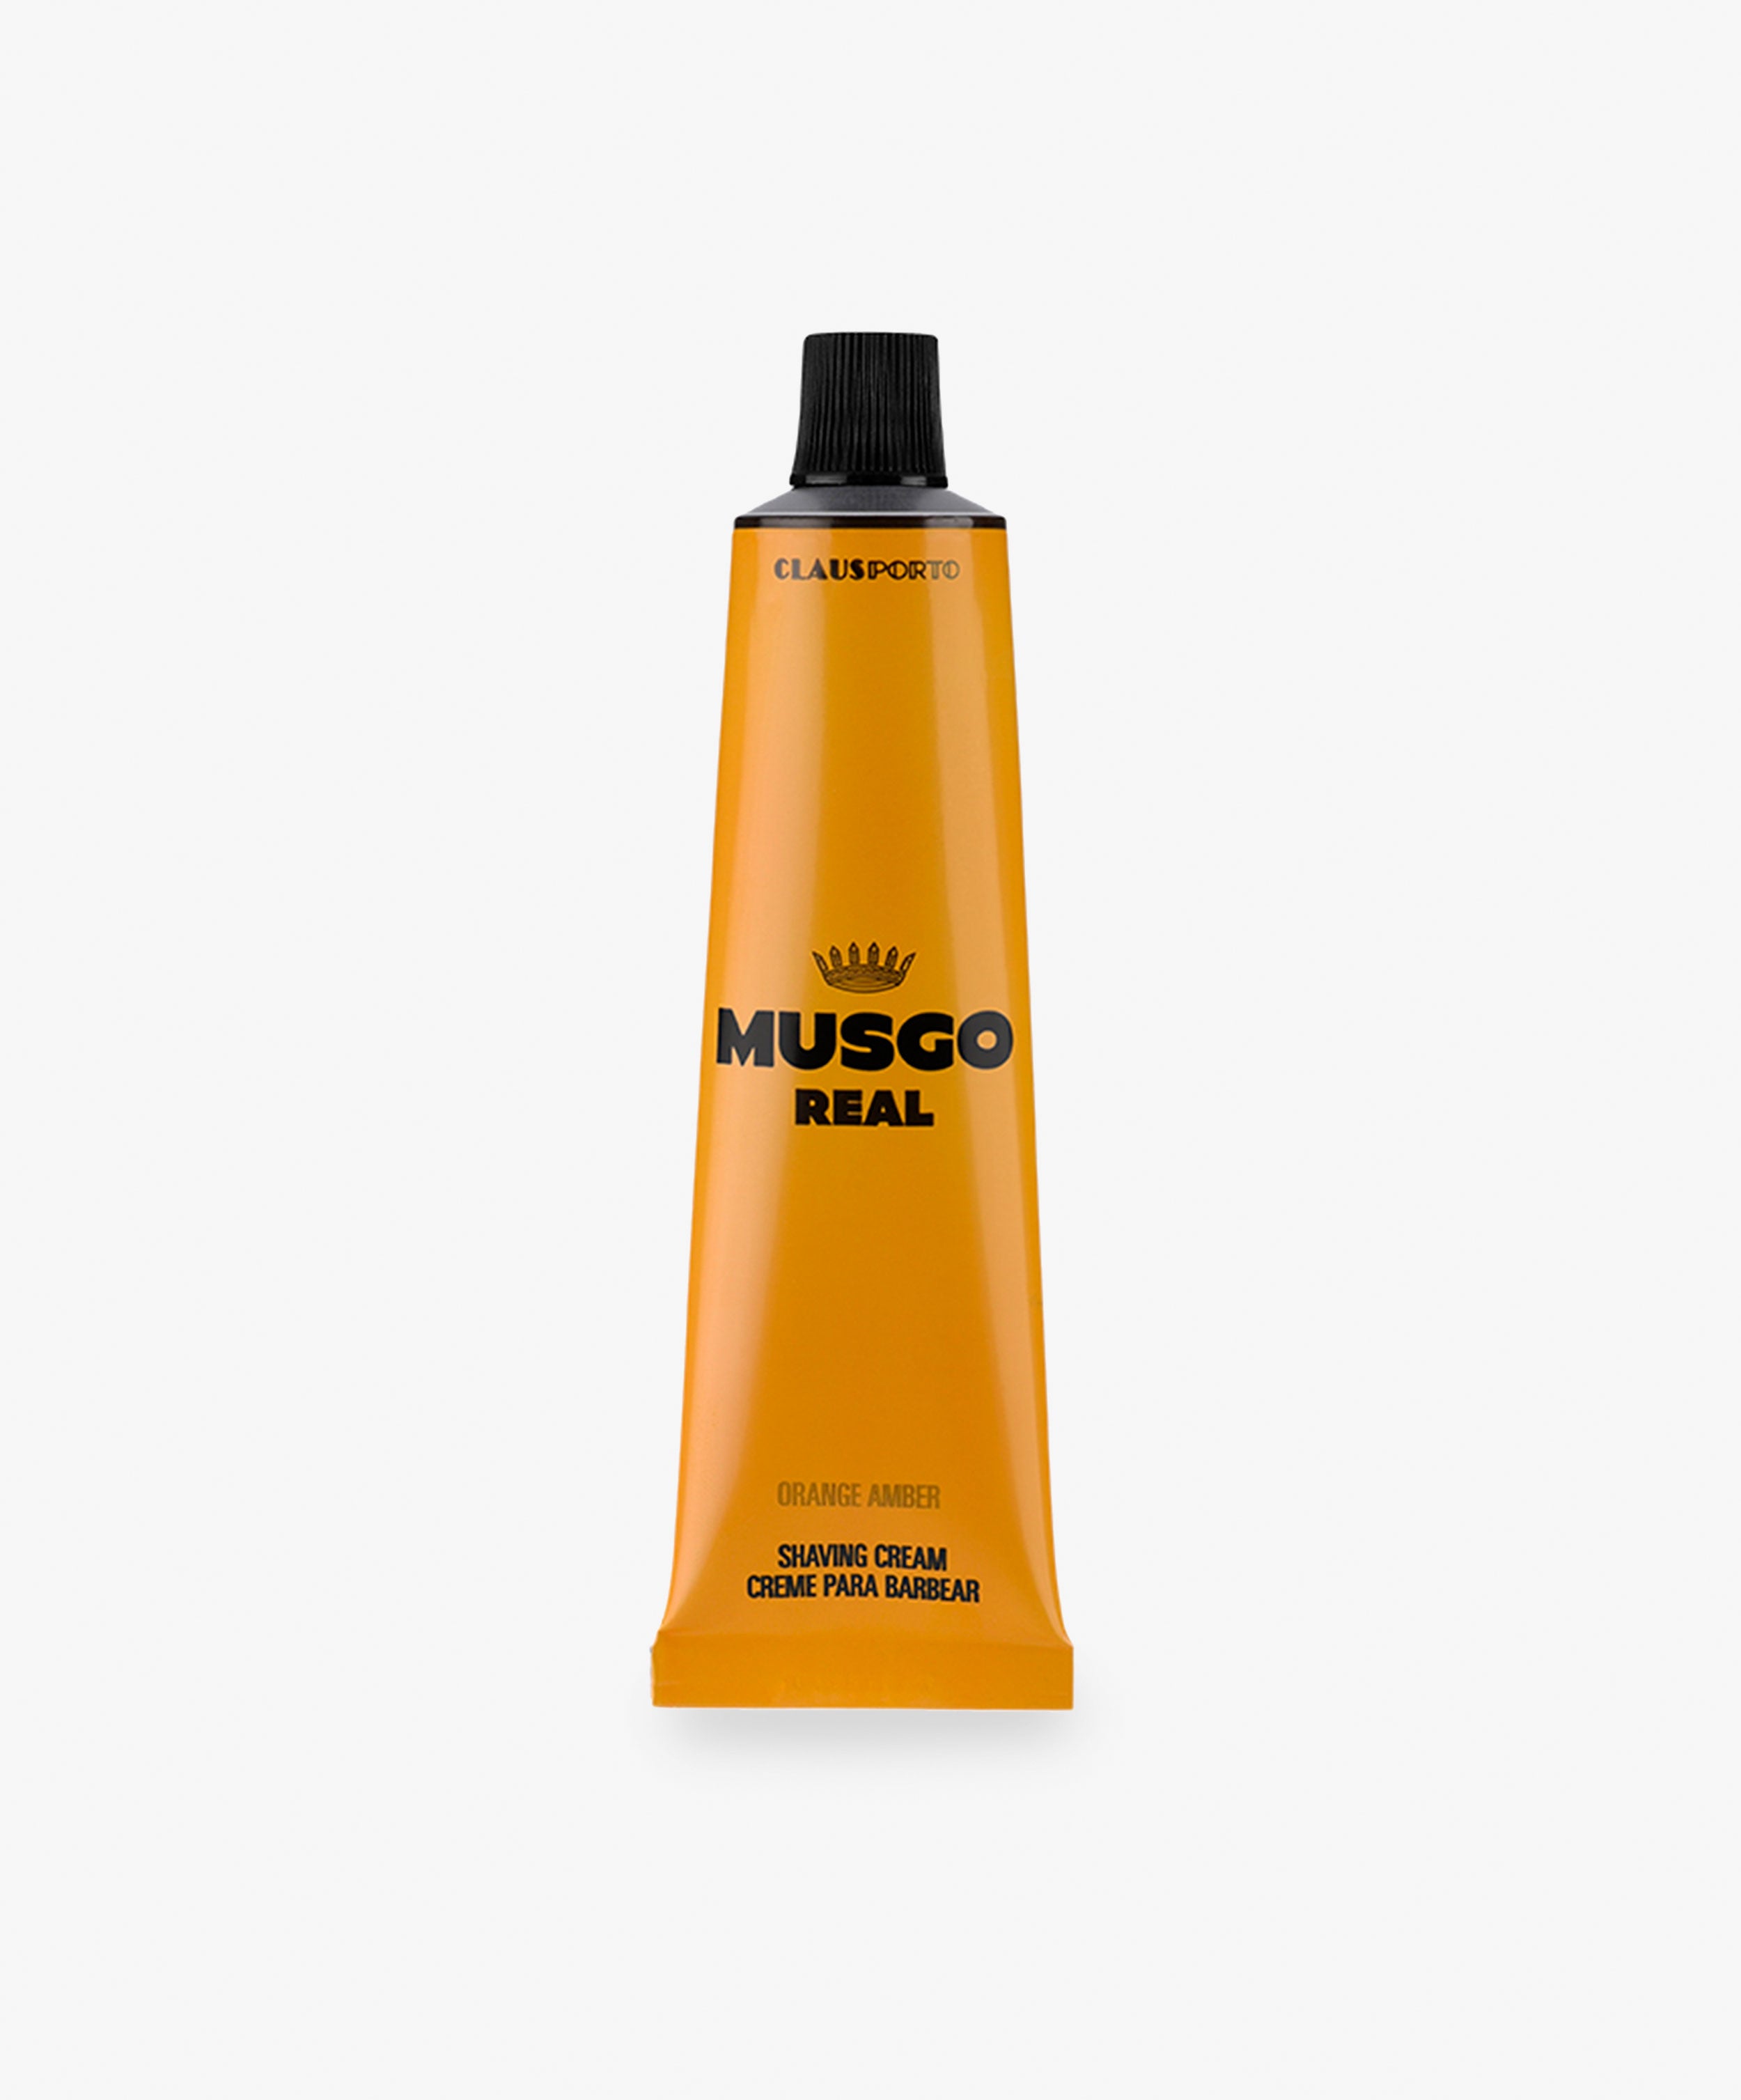 Musgo Real Shaving Cream, Orange Amber